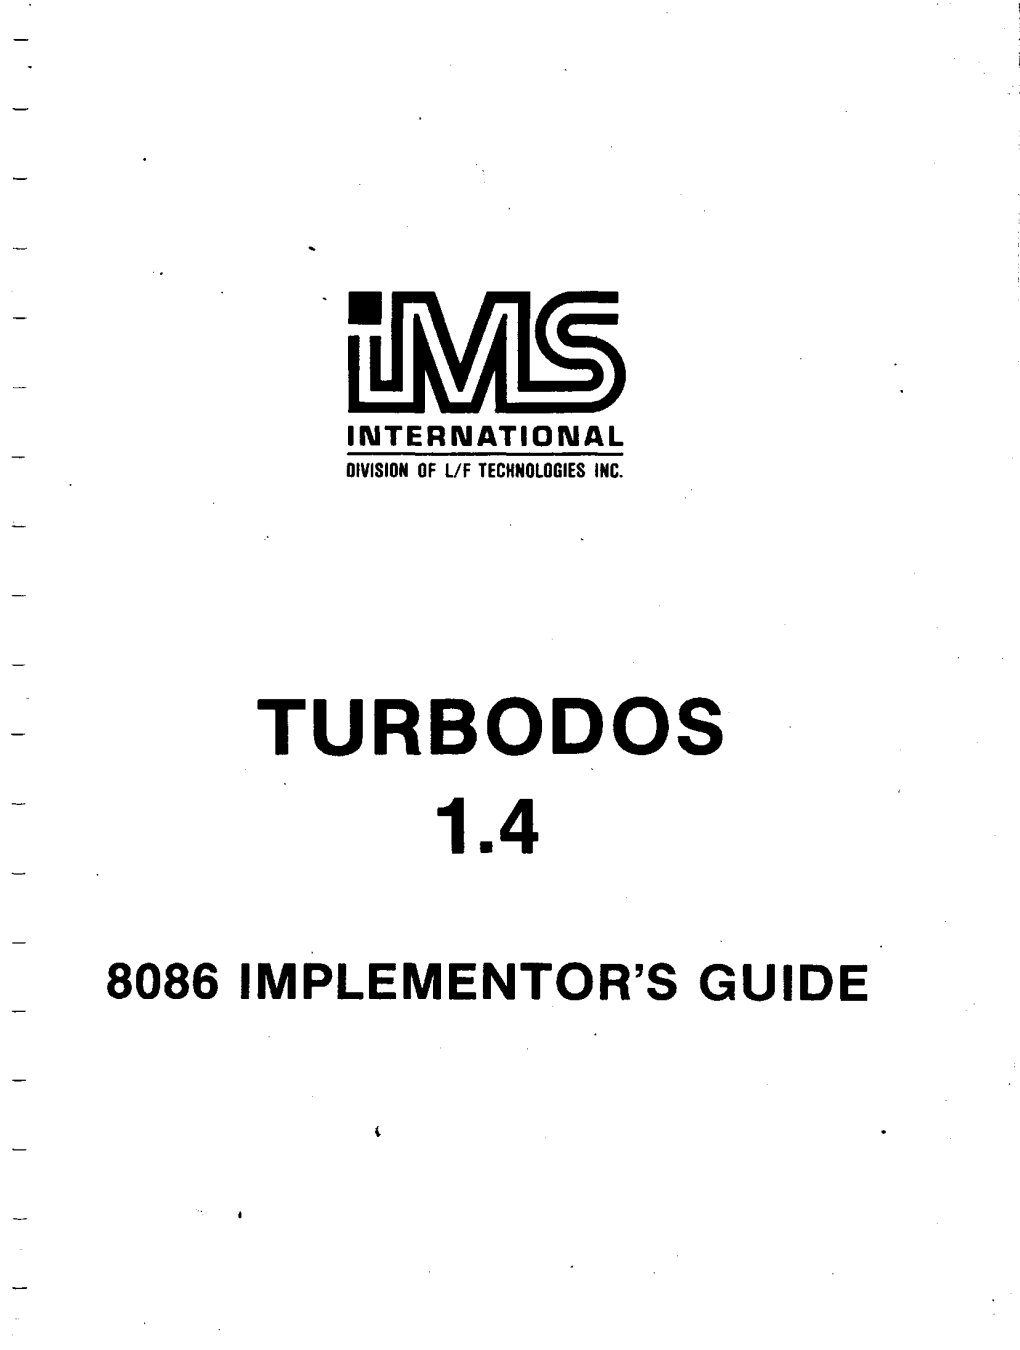 Turbodos 1.4